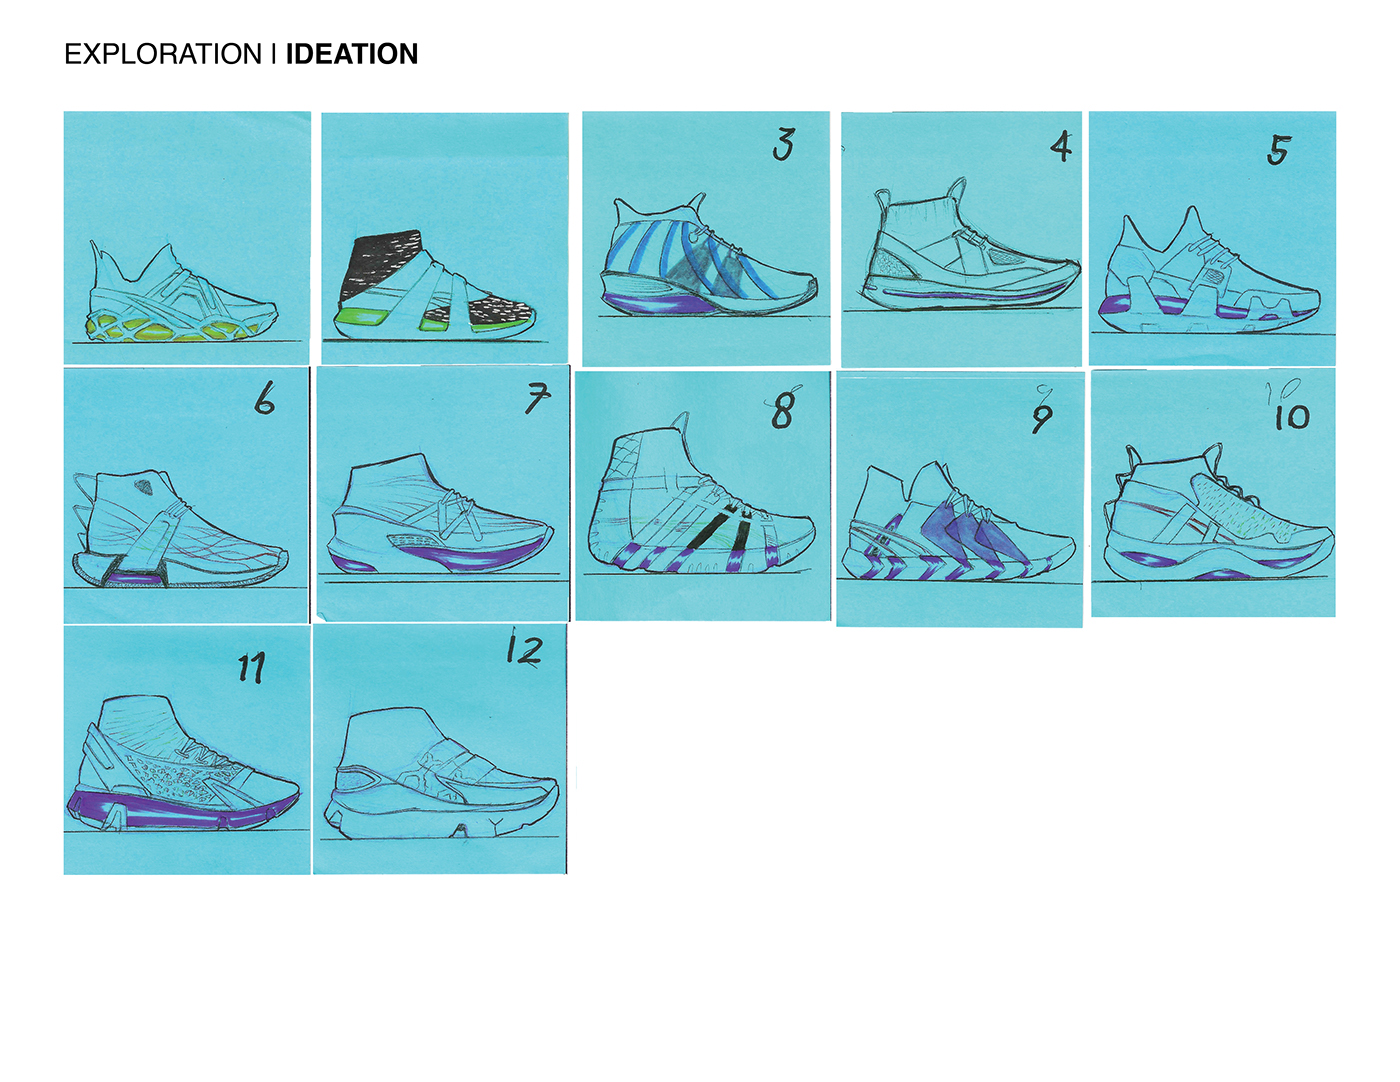 Pensole Foot Locker Asics footwear design Nike shoe design sneaker conceptkicks industrial design 